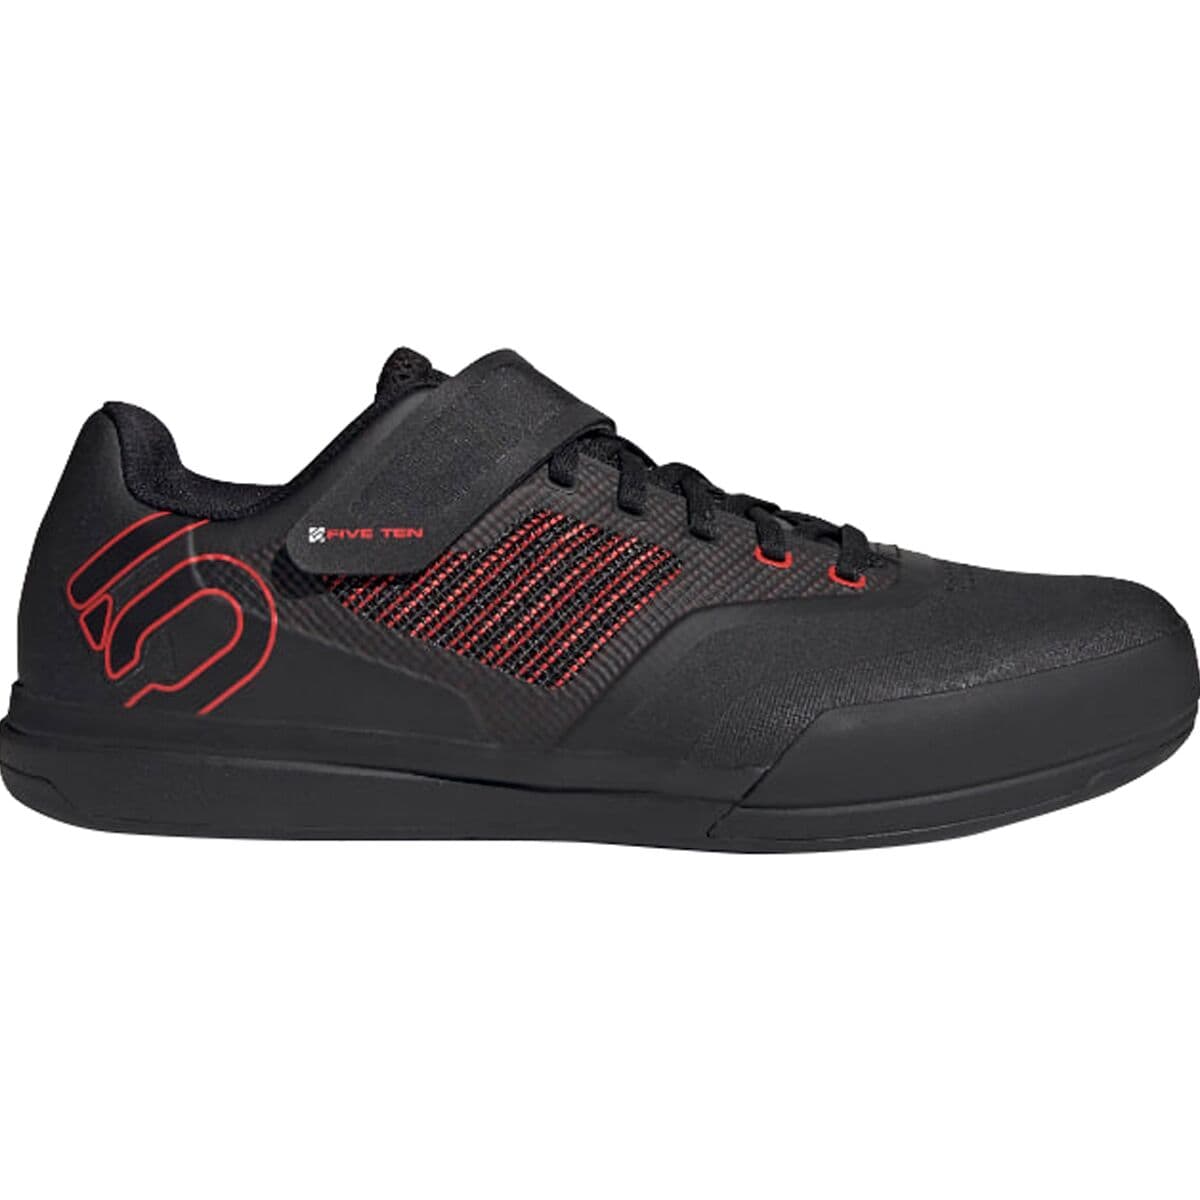 Five Ten Hellcat Pro Cycling Shoe - Men's Red/Core Black/Core Black, 6.0